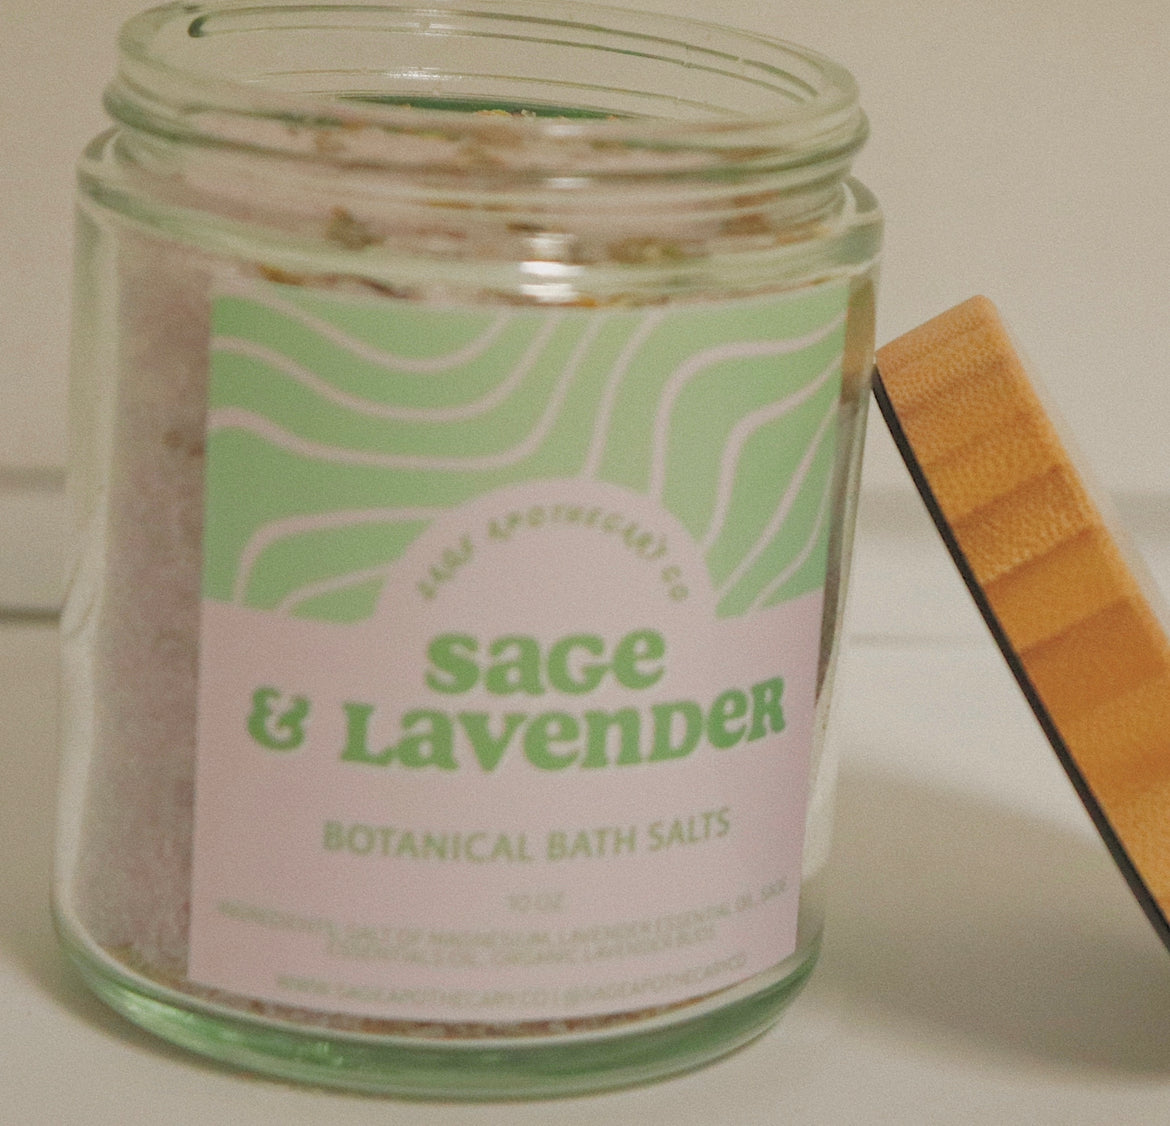 SAGE + LAVENDER BOTANICAL BATH SALT